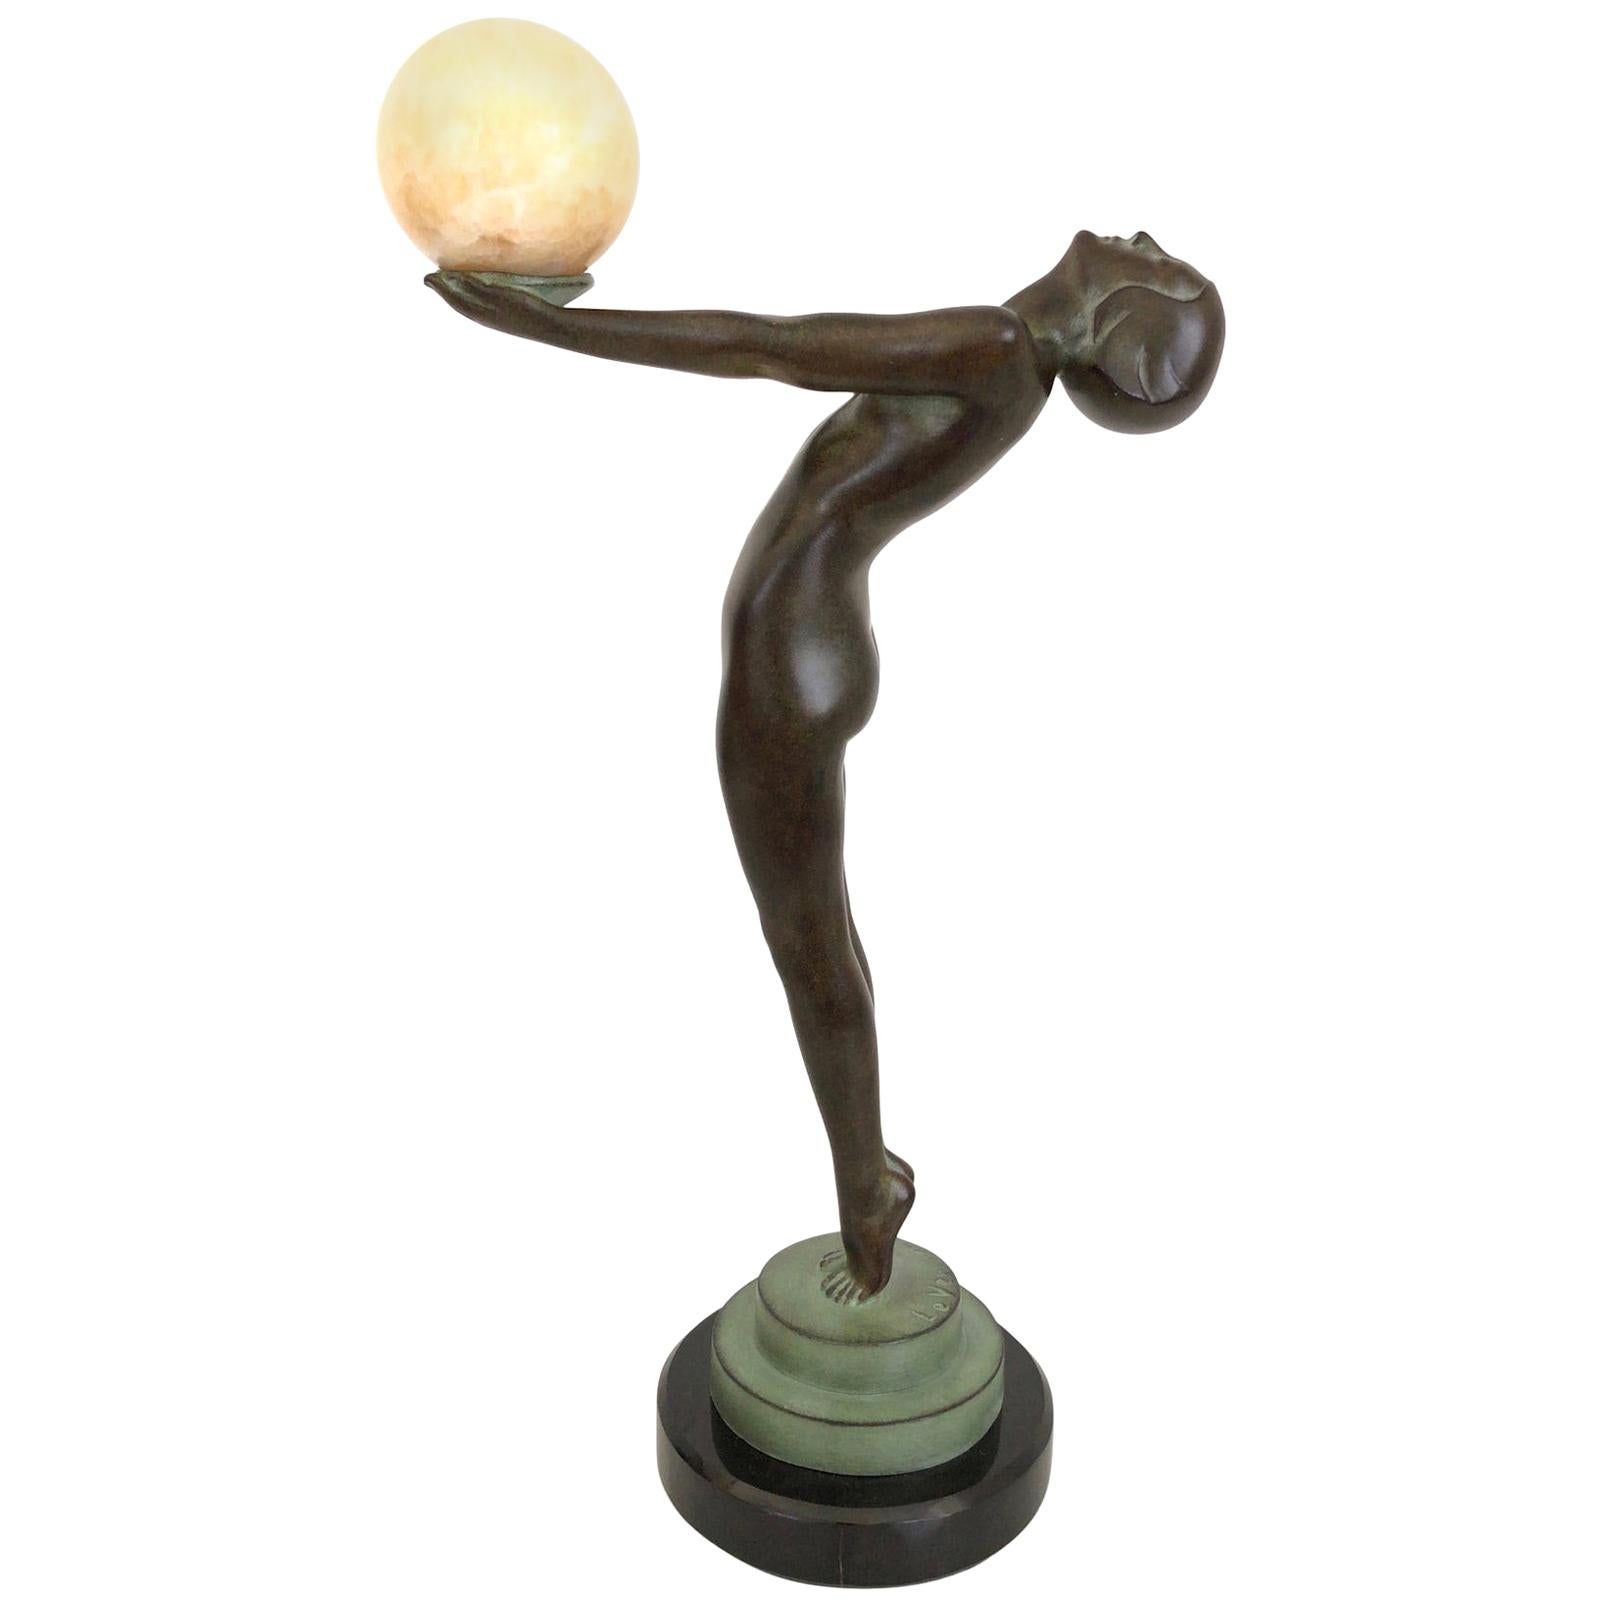 Art Deco Dancer Sculpture Leuer with Onyx Ball Original Max Le Verrier, France